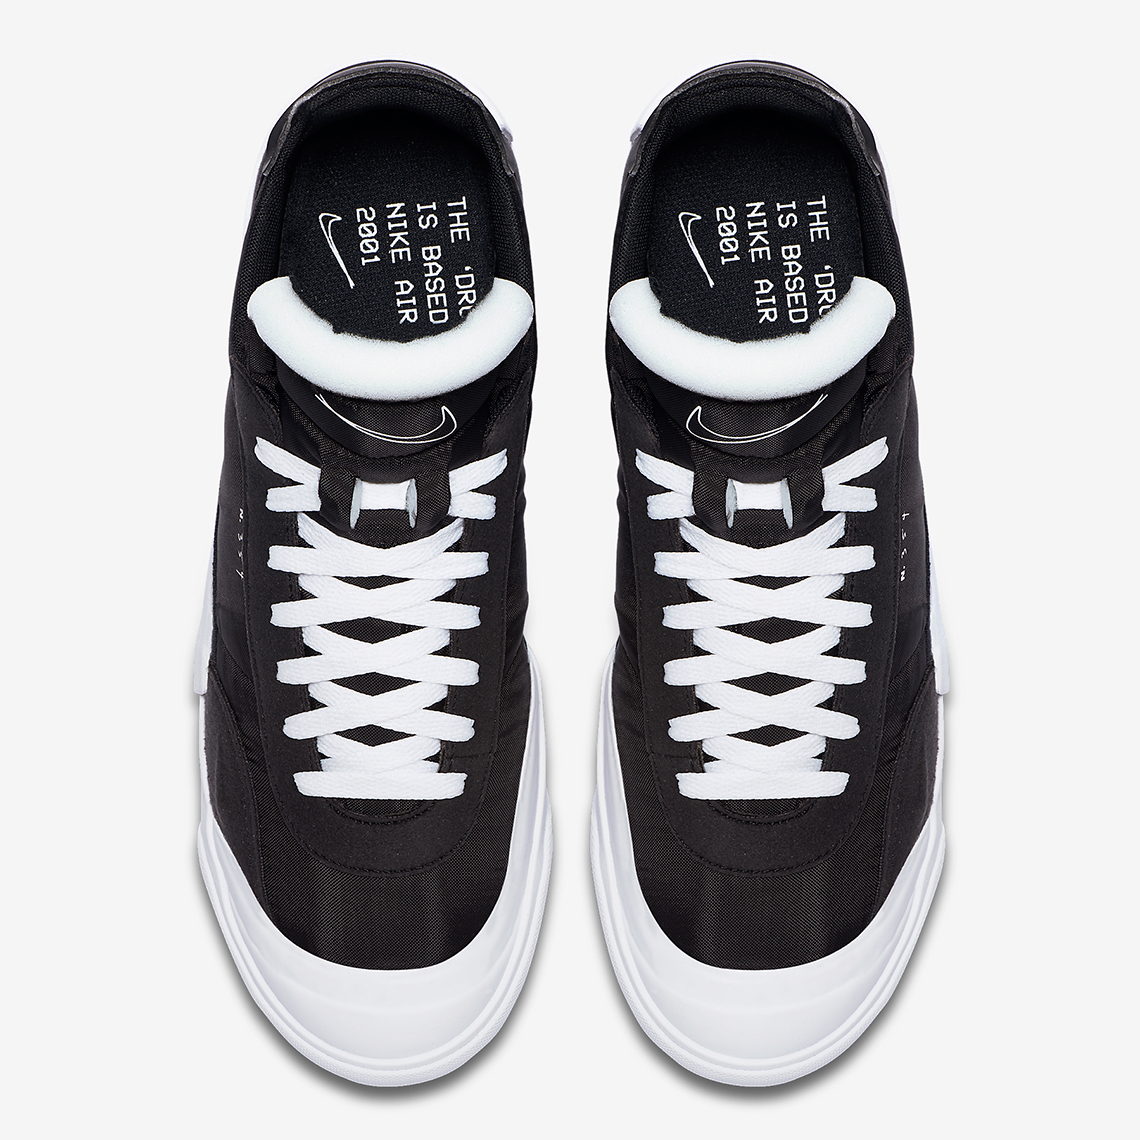 Nike Drop Type LX Black White | SneakerNews.com